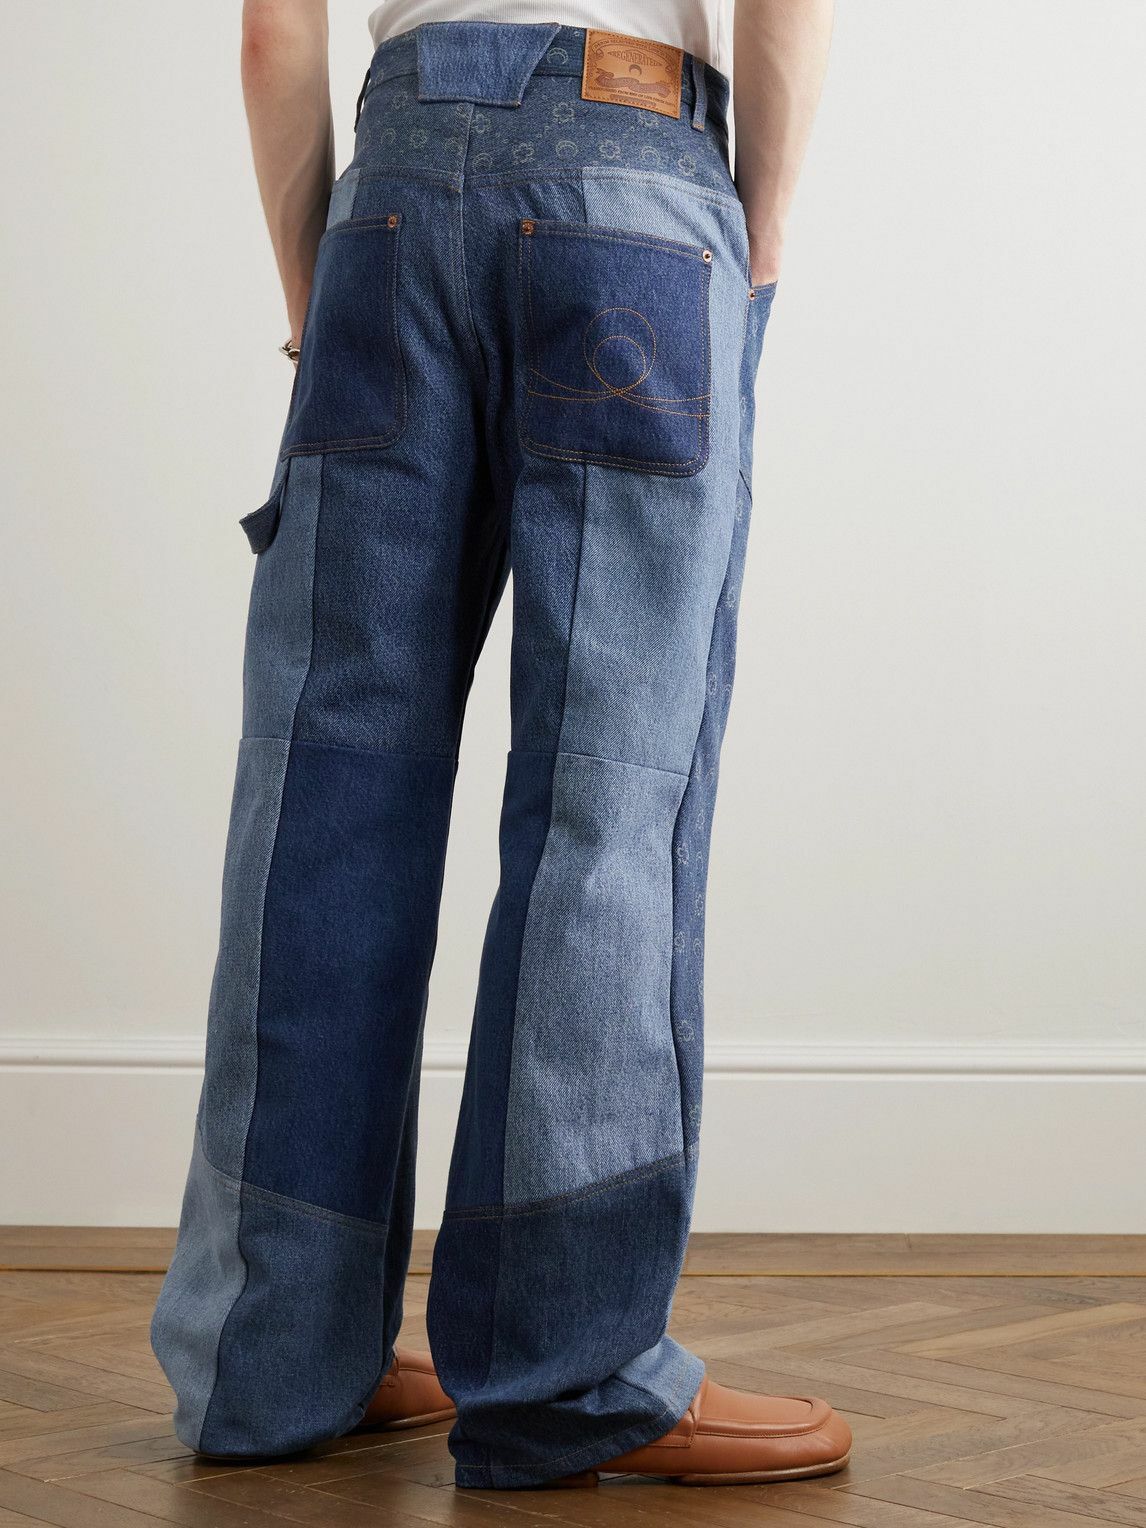 Marine Serre - Straight-Leg Printed Patchwork Jeans - Blue Marine Serre